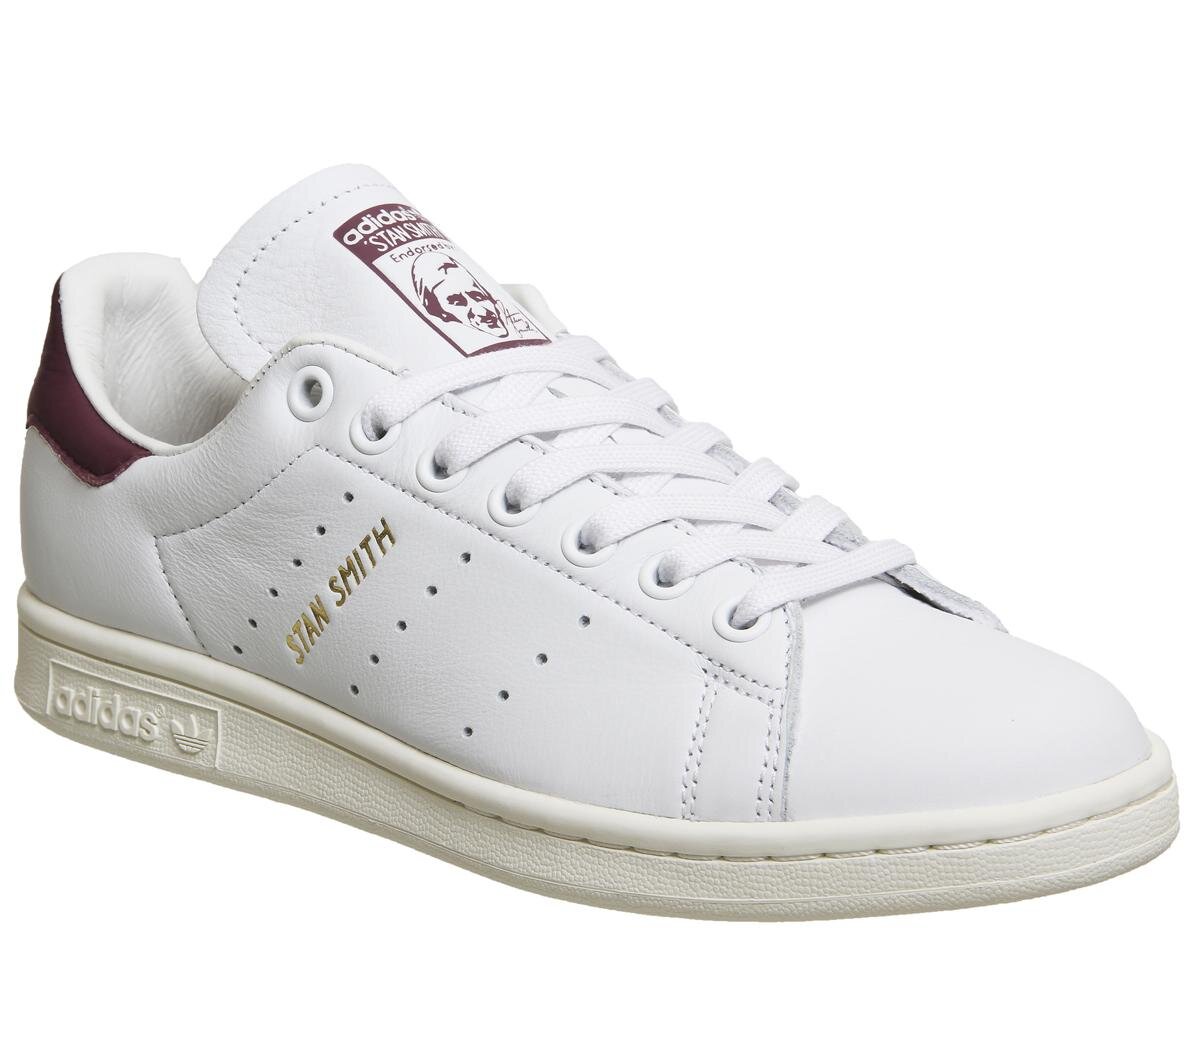 Adidas Stan Smith Shoes in White/Collegiate Burgundy — UFO No More